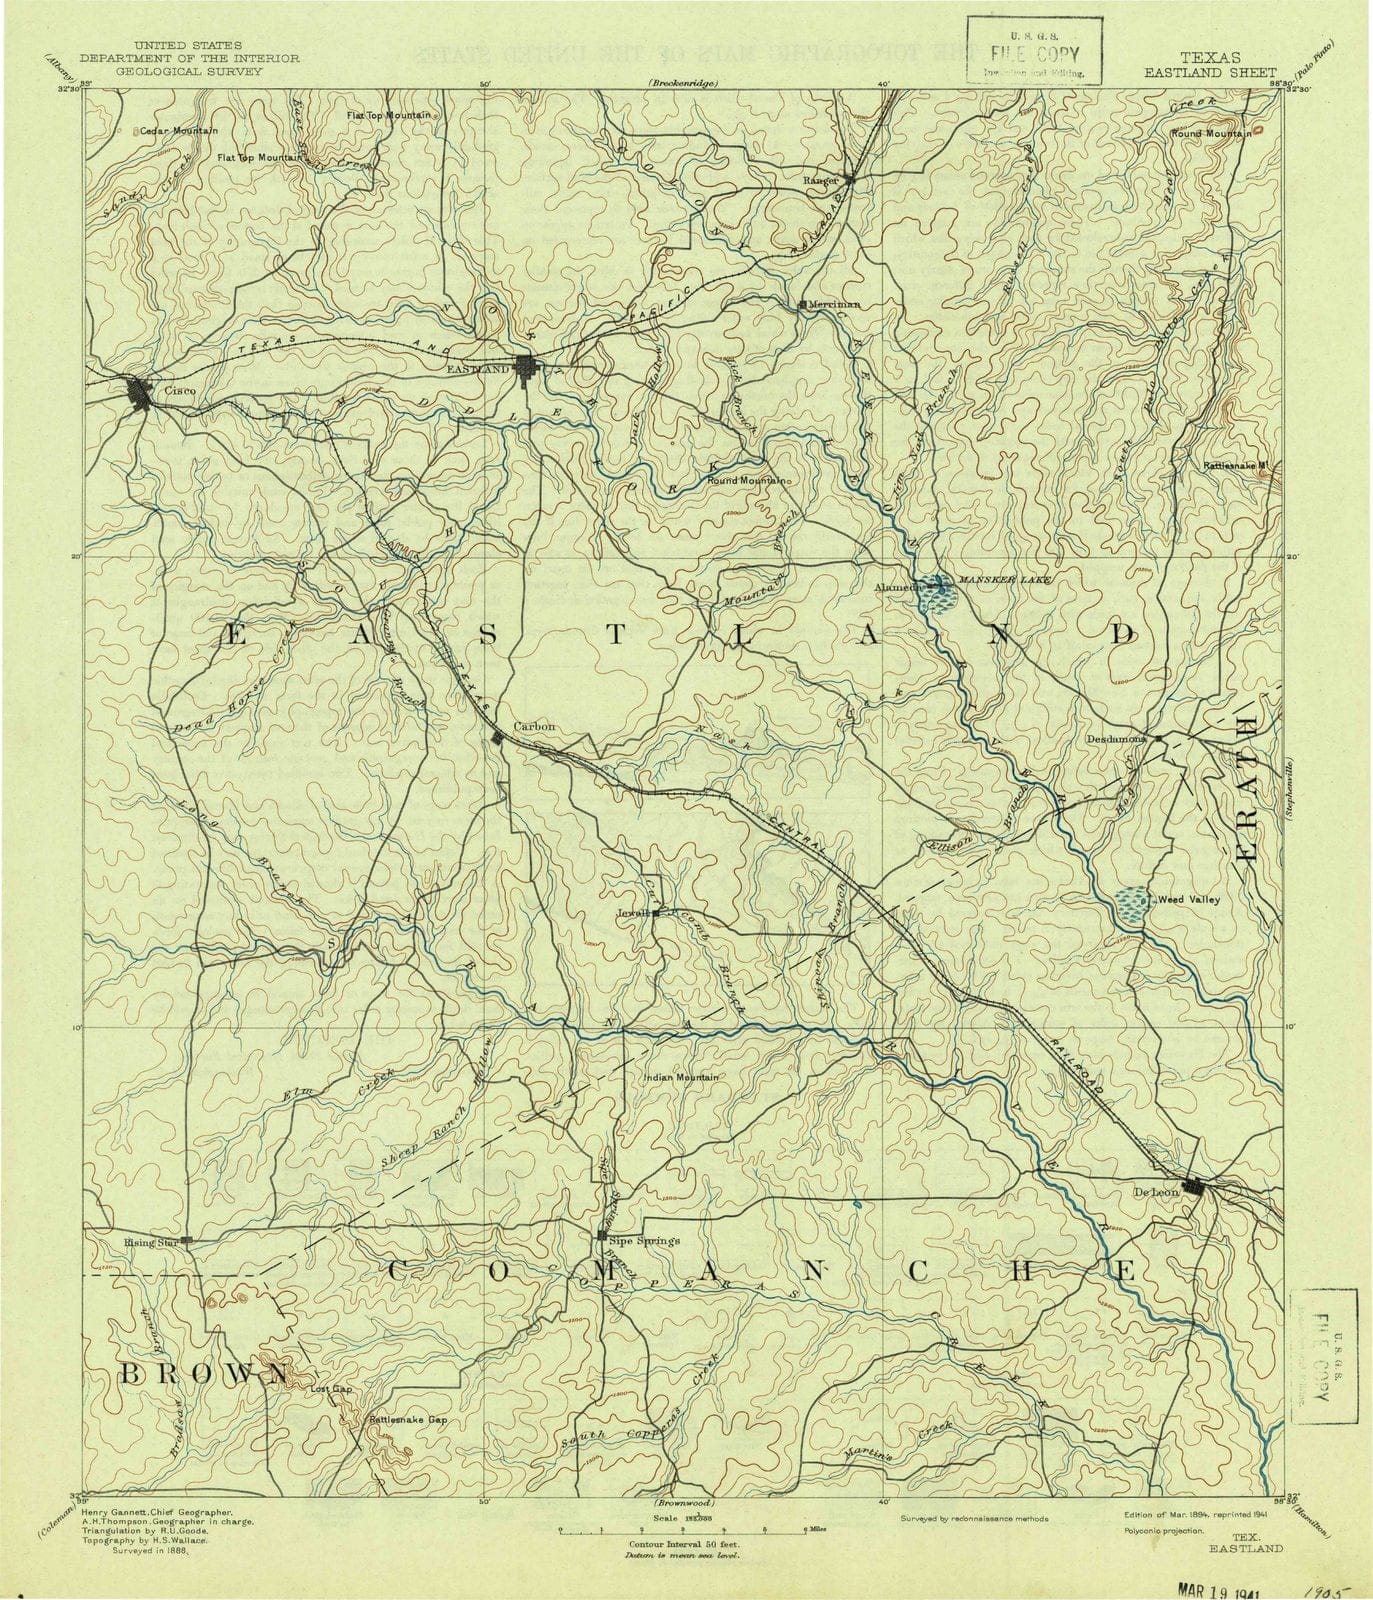 1894 Eastland, TX - Texas - USGS Topographic Map